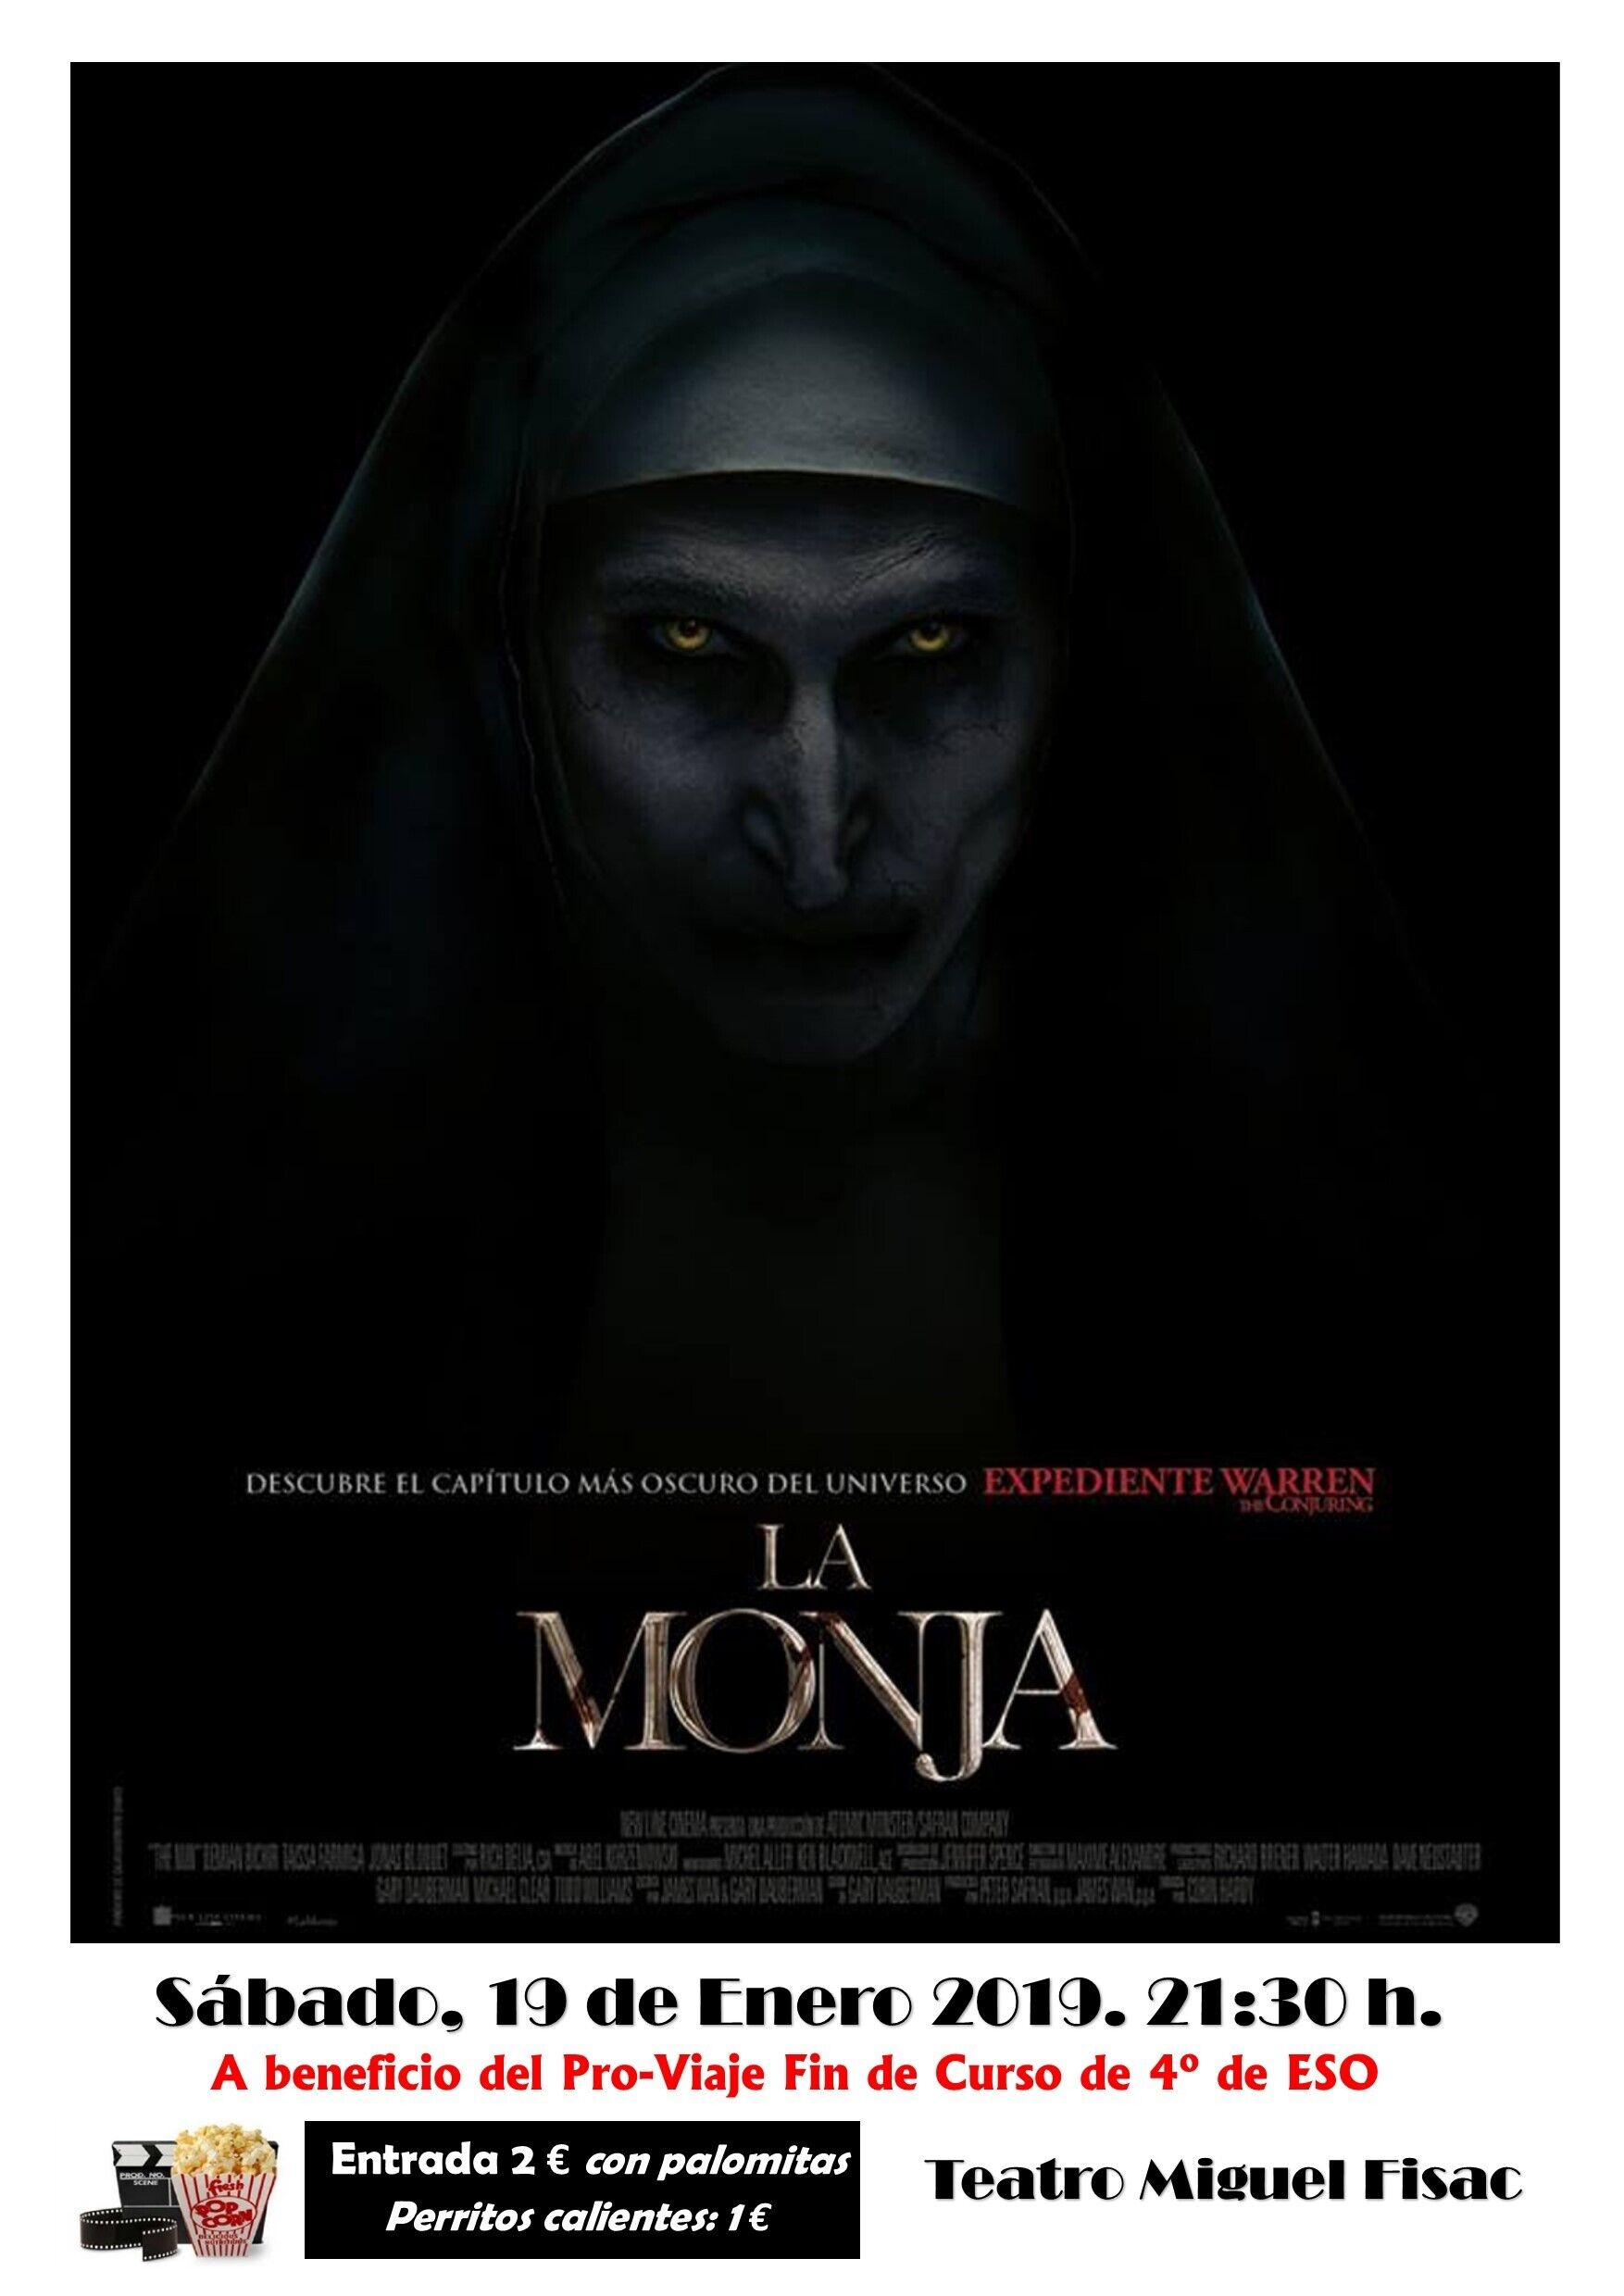 Cine La Monja